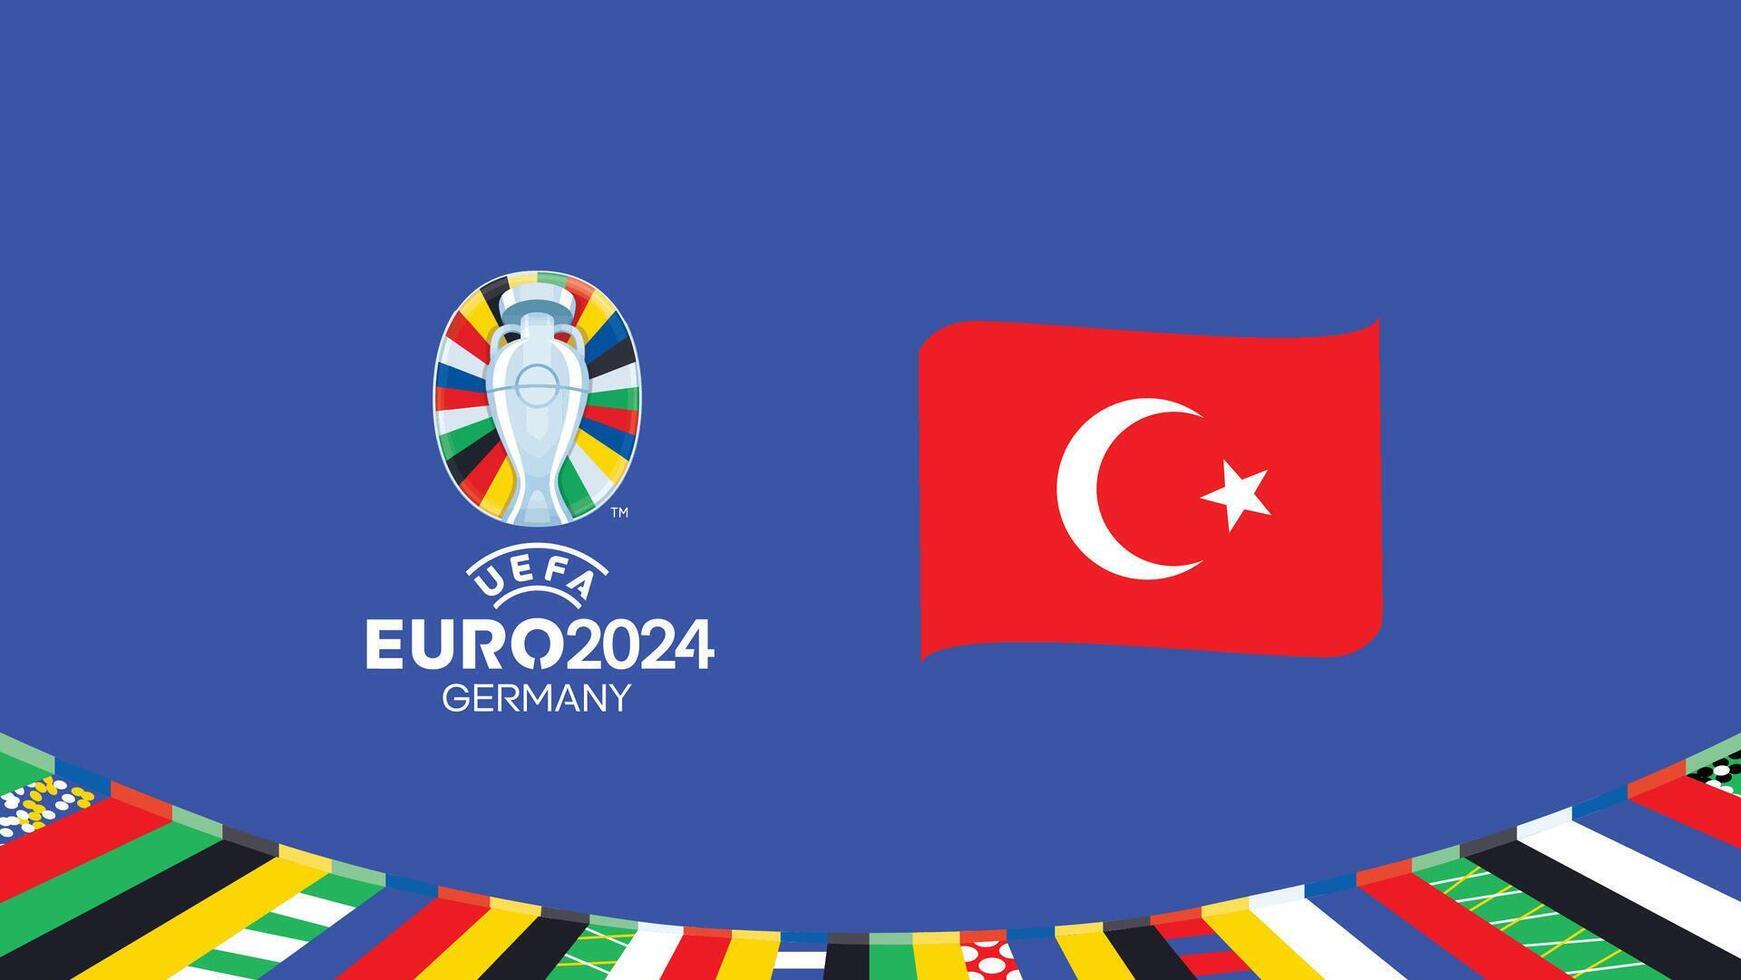 euro 2024 turkiye emblema cinta equipos diseño con oficial símbolo logo resumen países europeo fútbol americano ilustración vector